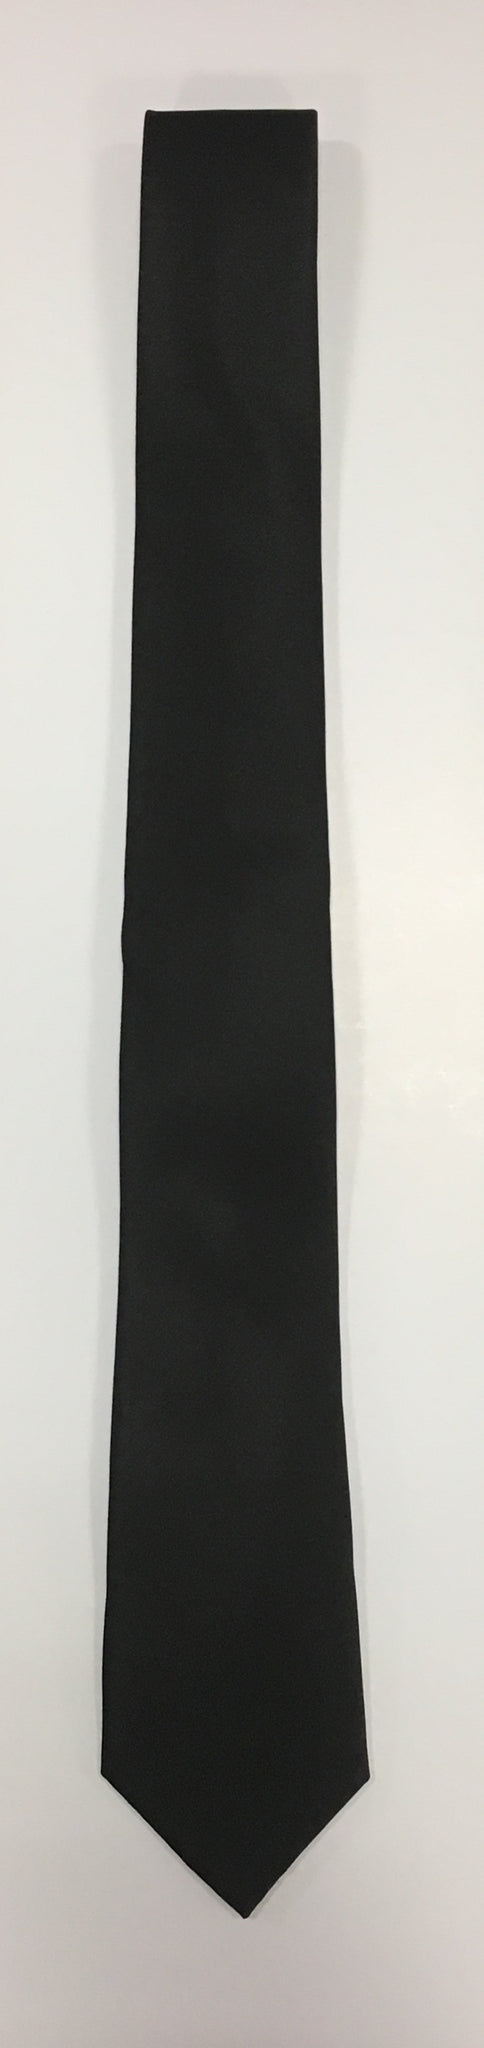 Plain Black Ties